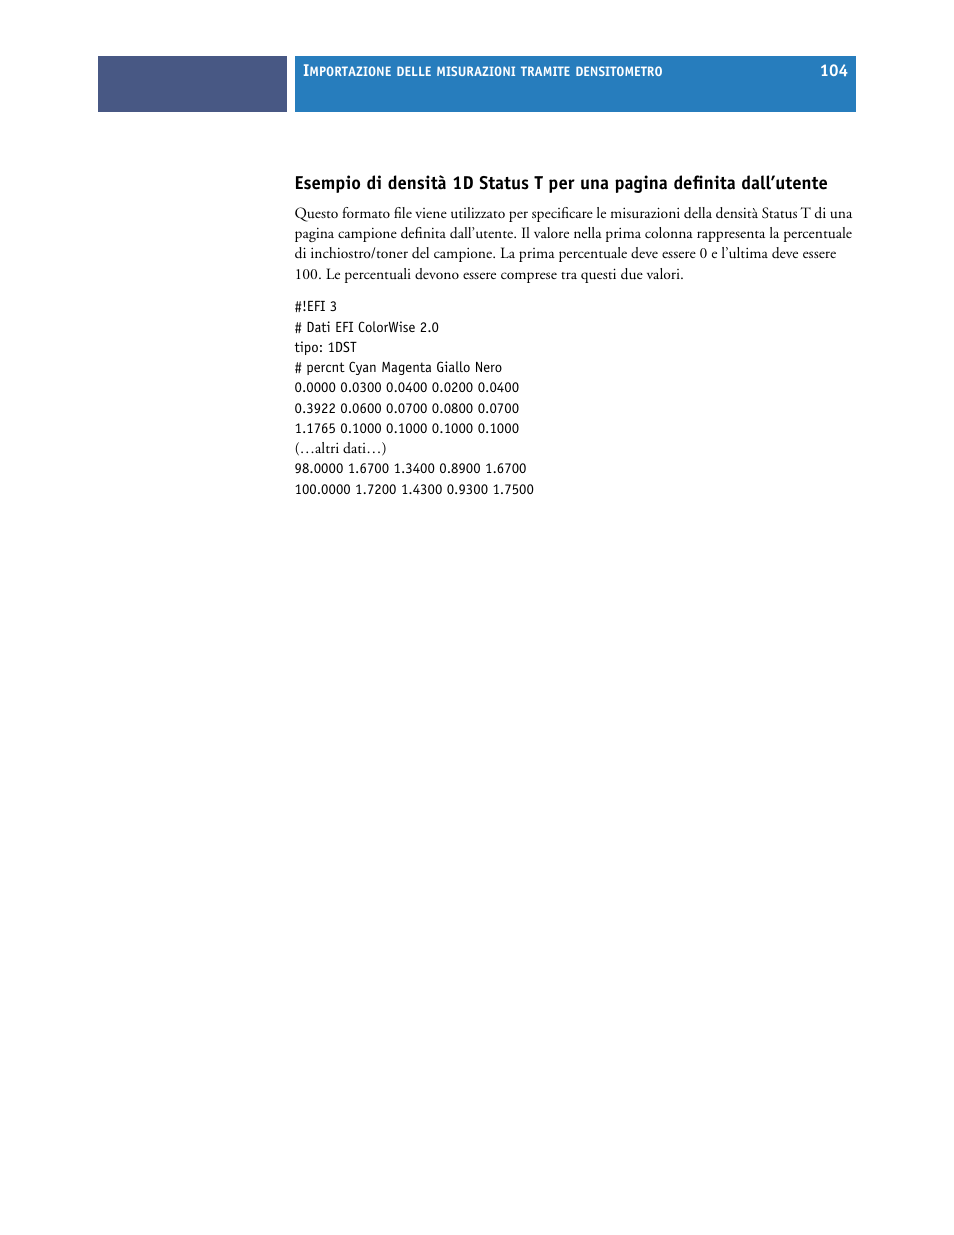 Konica Minolta IC-406 Manuale d'uso | Pagina 104 / 108